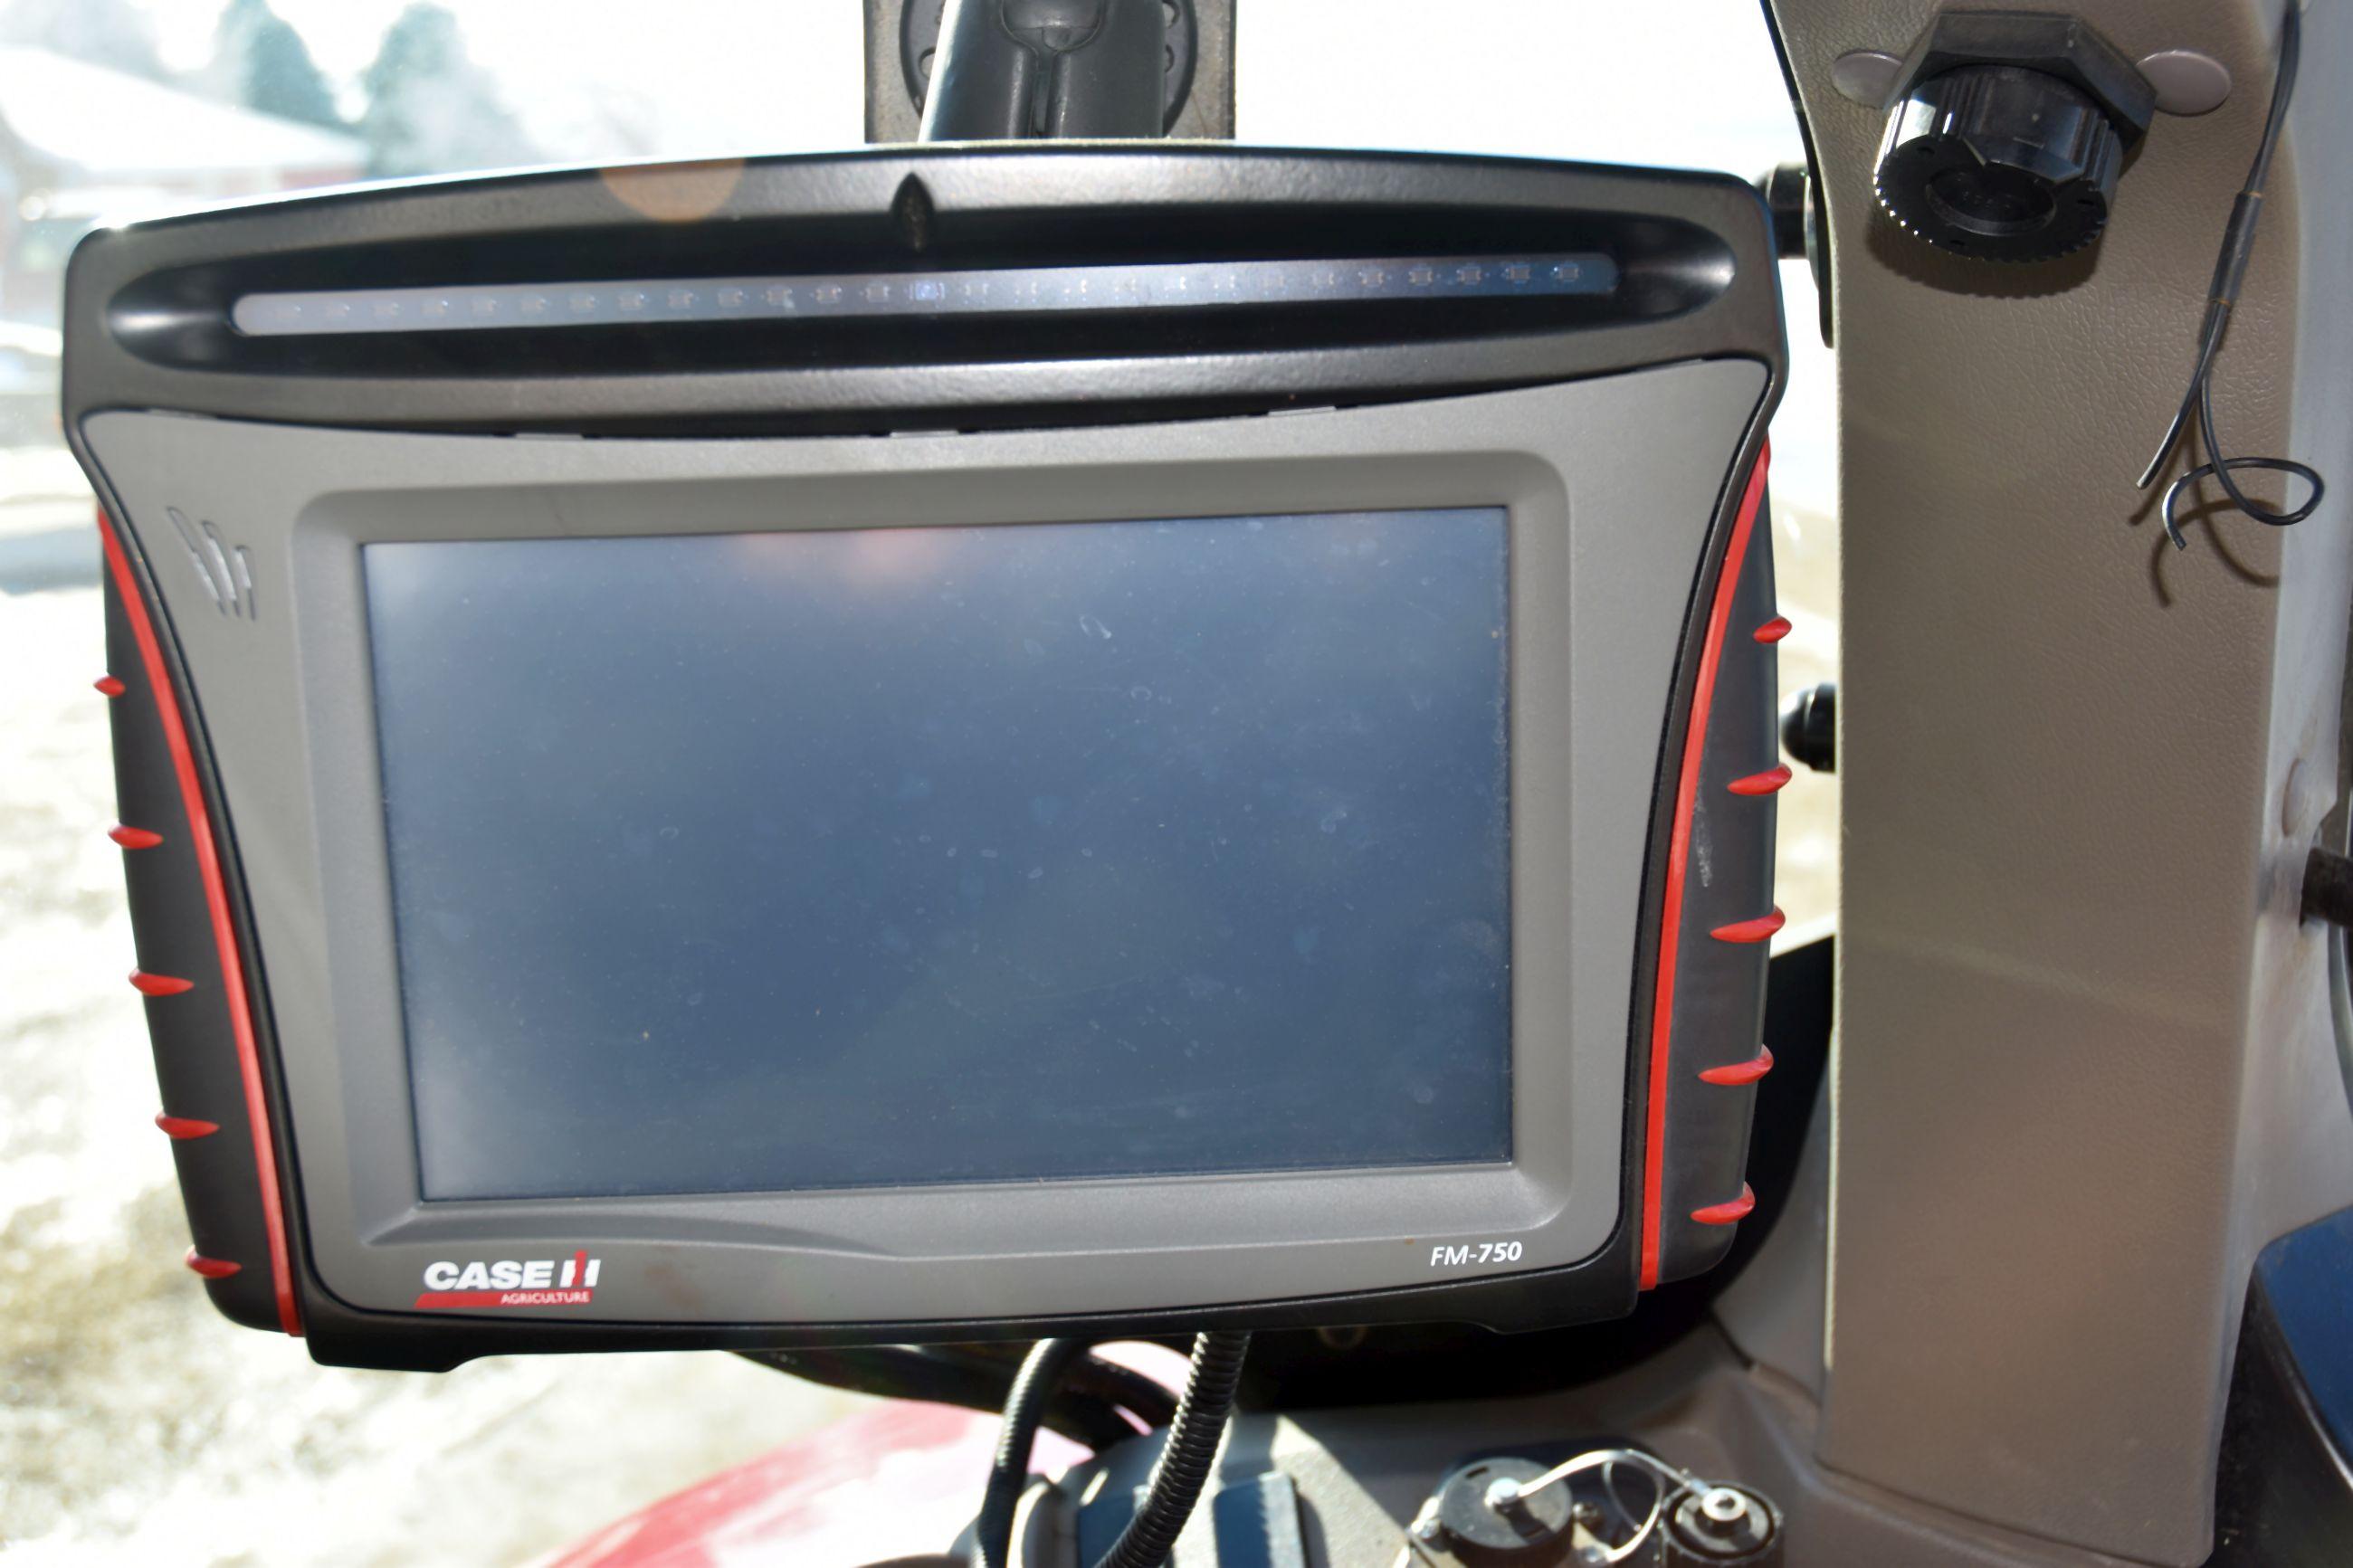 2012 Case IH Puma 160 MFWD, CVT, Auto Steer, AFS 750 Monitor with CIH Receiver, 1,276 Hours, 460/85R